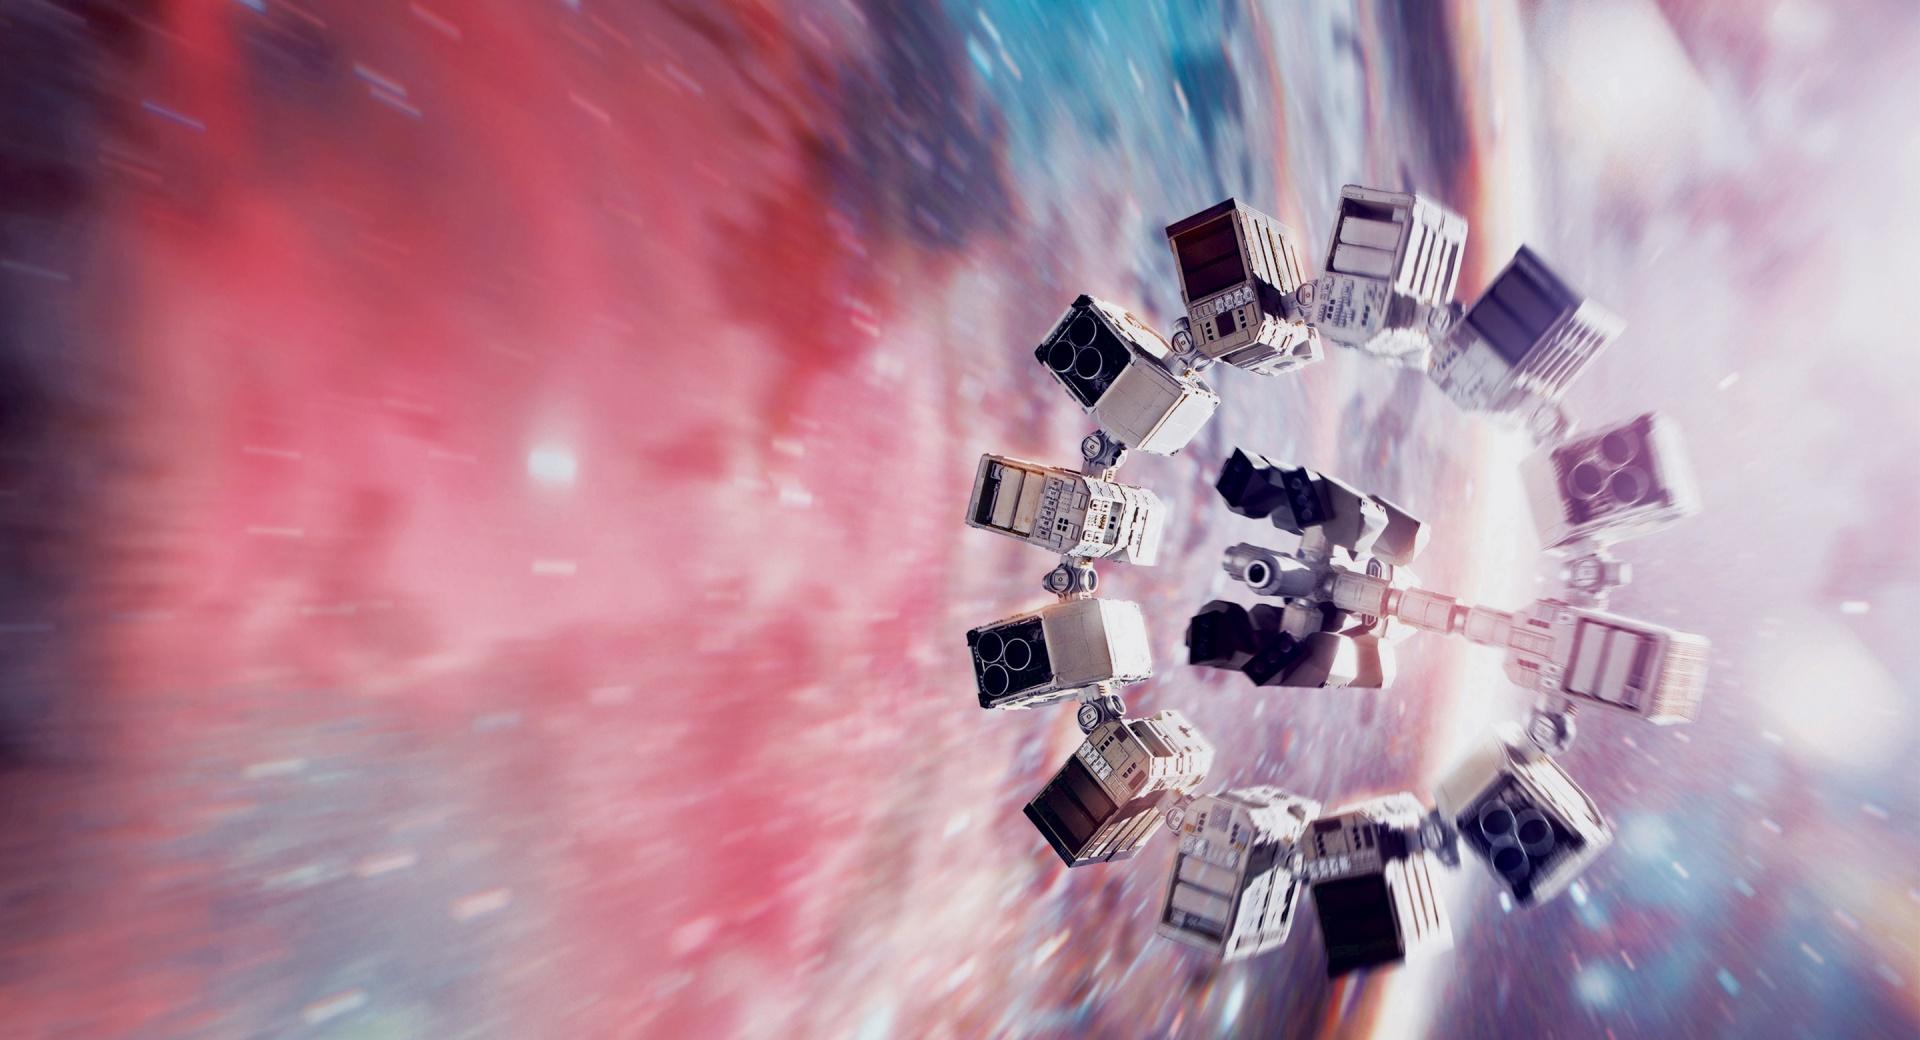 Interstellar Endurance Spacecraft at 2048 x 2048 iPad size wallpapers HD quality